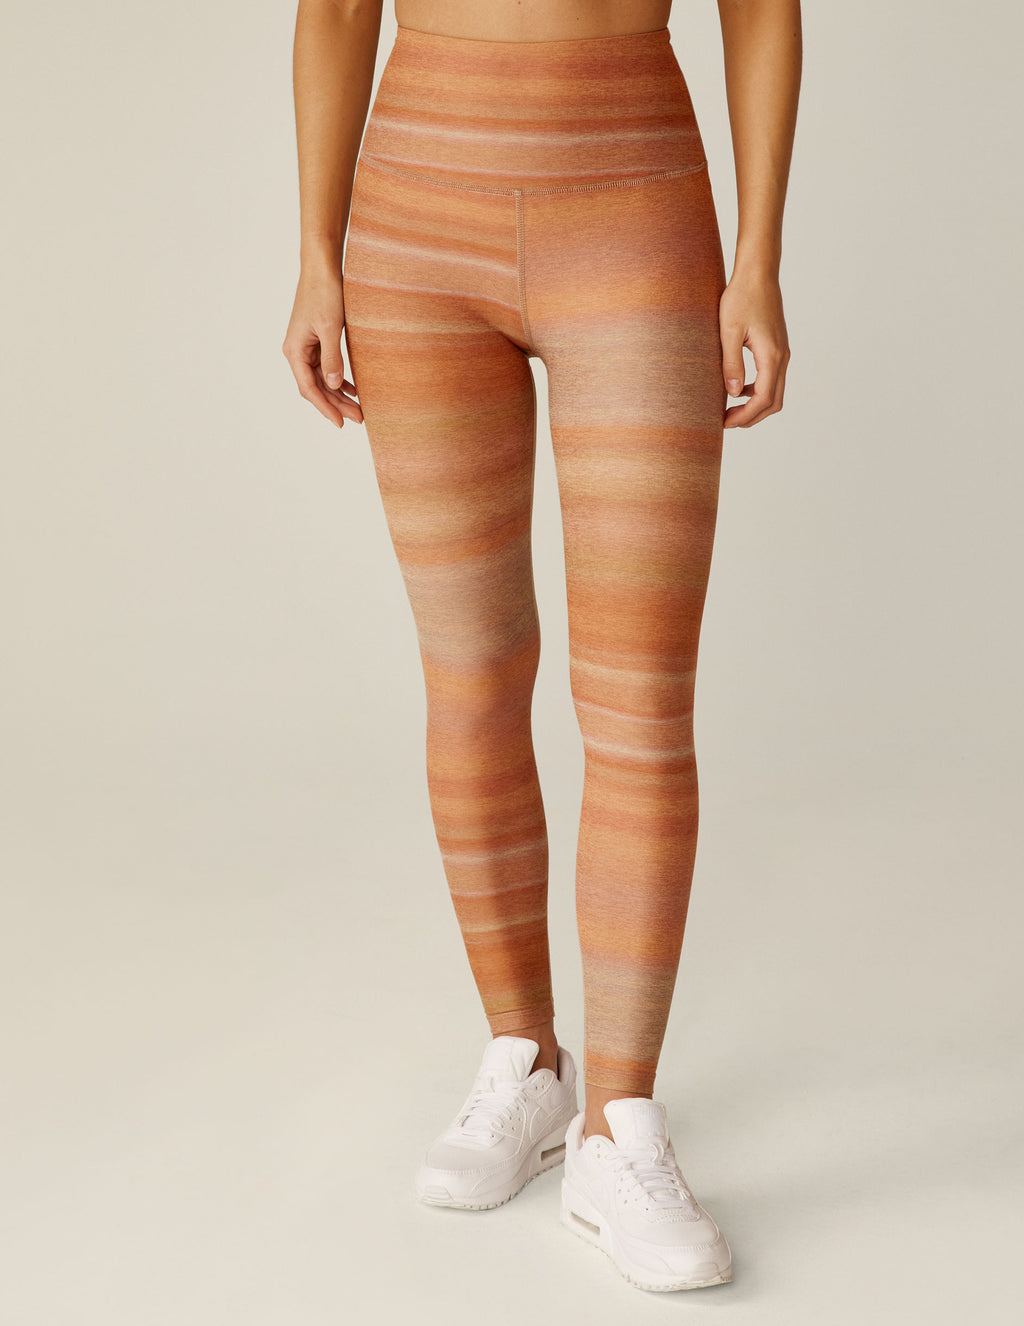 Bronze/Orange/White on Grey Leggings